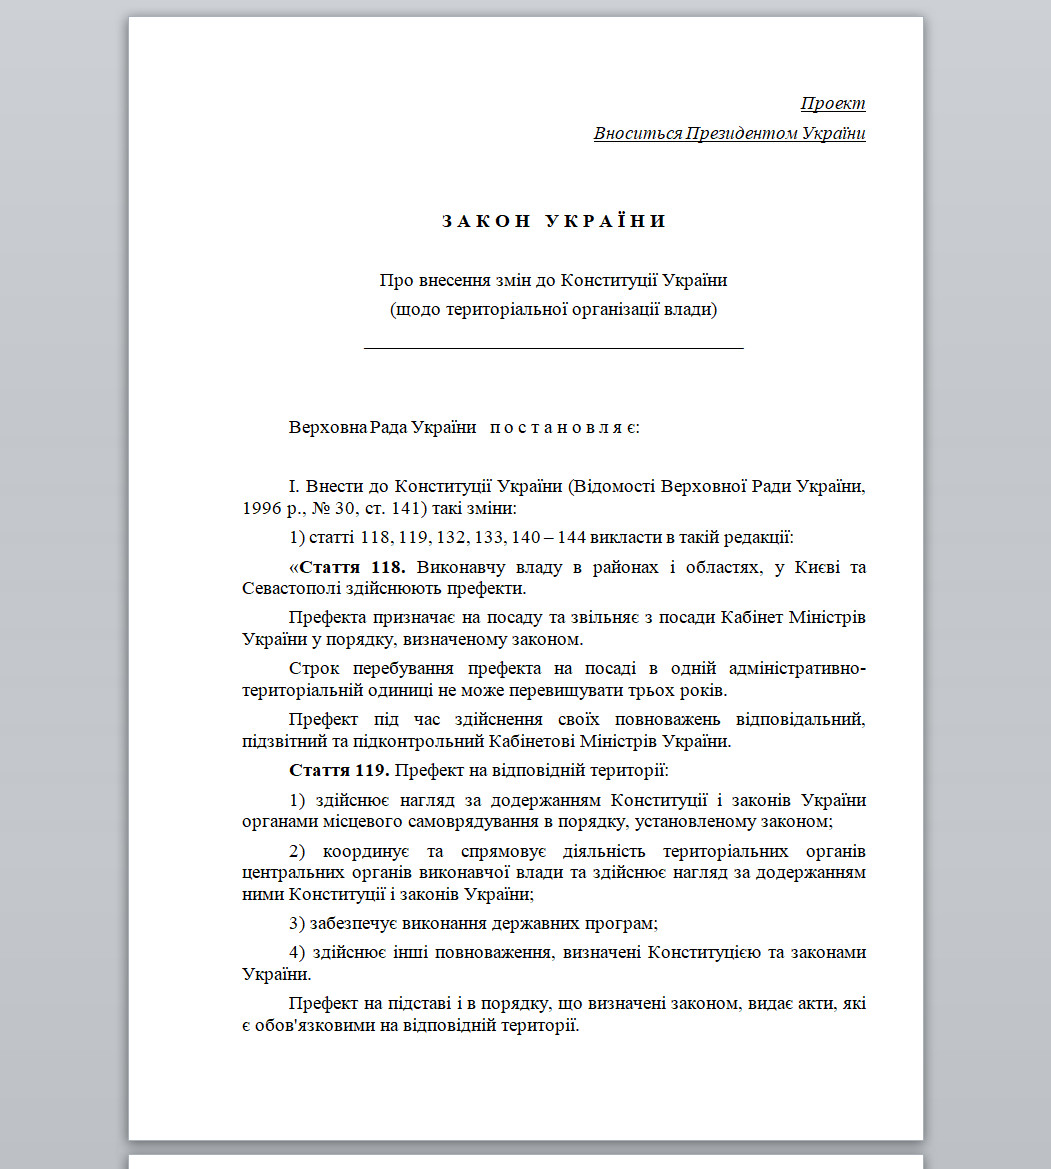 https://www.kmu.gov.ua/ua/news/zmini-do-konstituciyi-v-chastini-decentralizaciyi